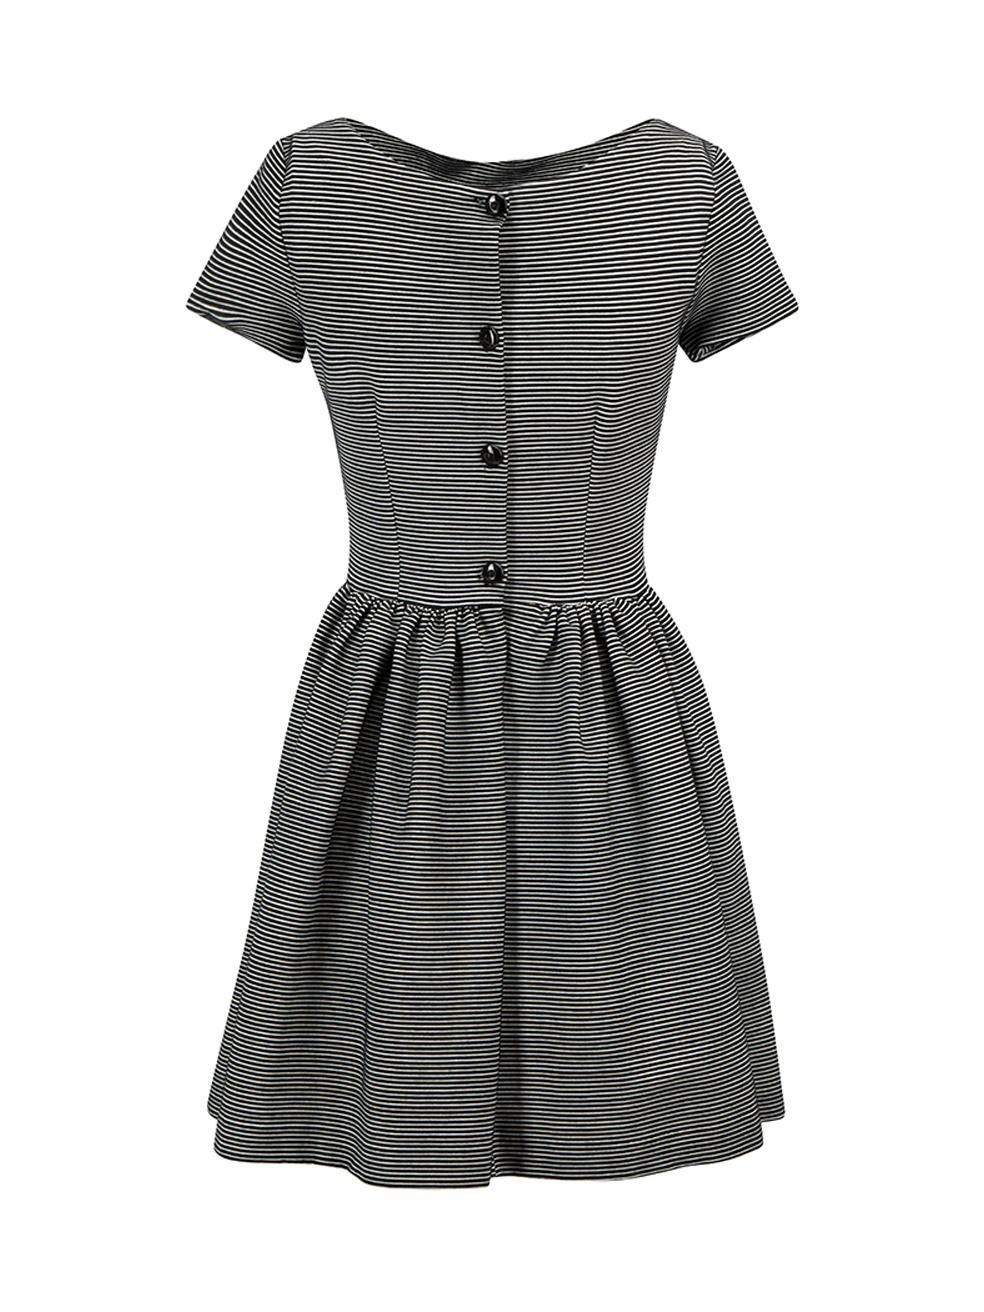 Black & White Stripe Mini Dress Size S In Good Condition For Sale In London, GB